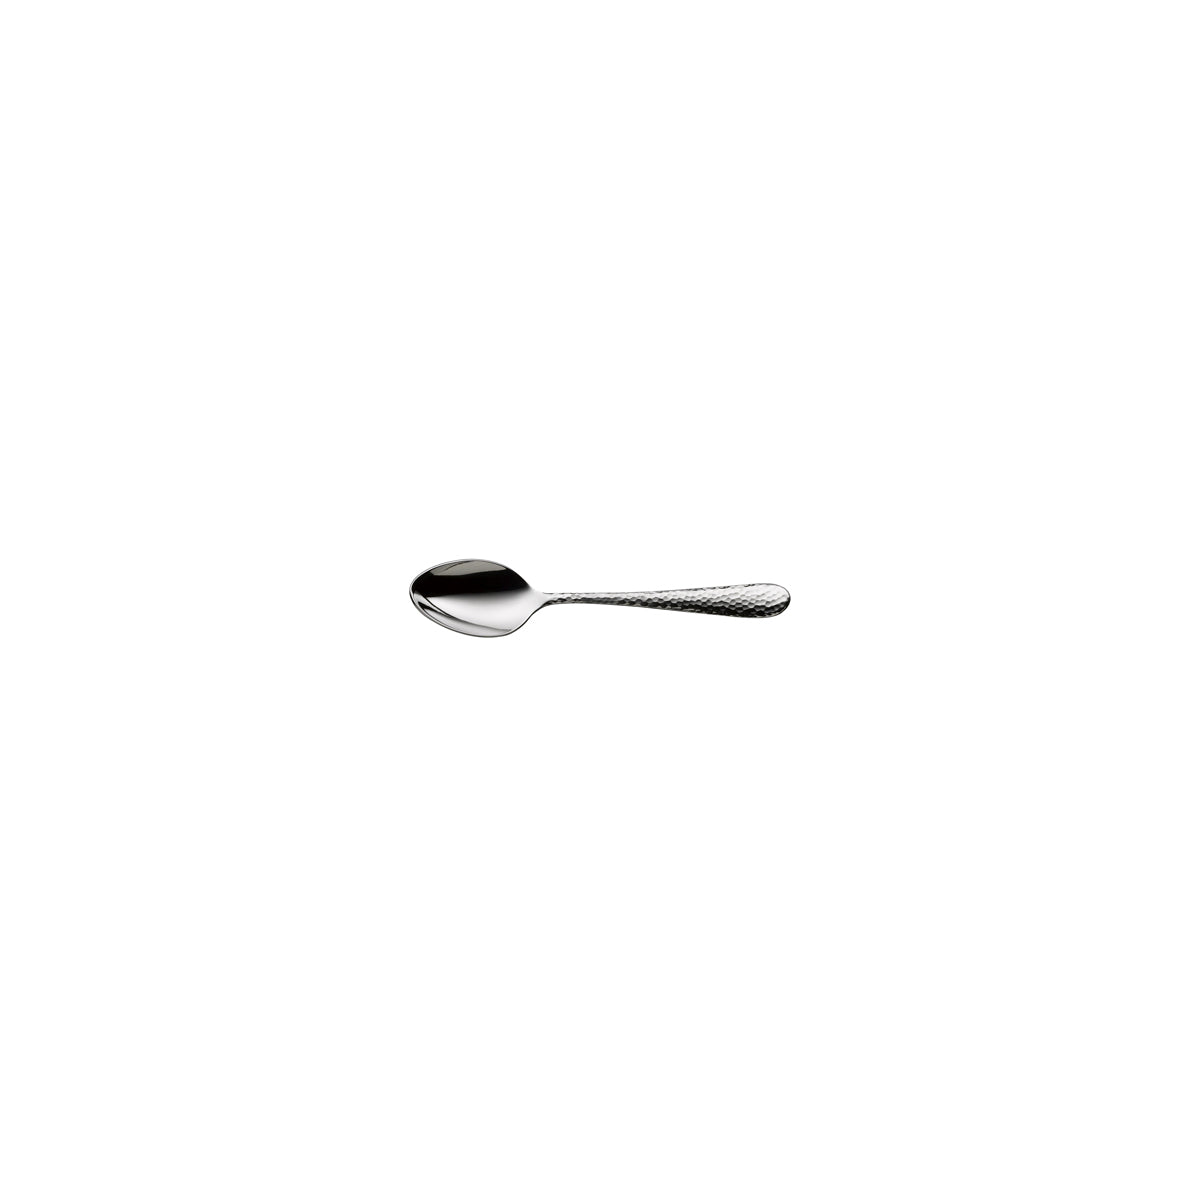 54.5009.6030 WMF Sitello Coffee Spoon Silverplated Tomkin Australia Hospitality Supplies